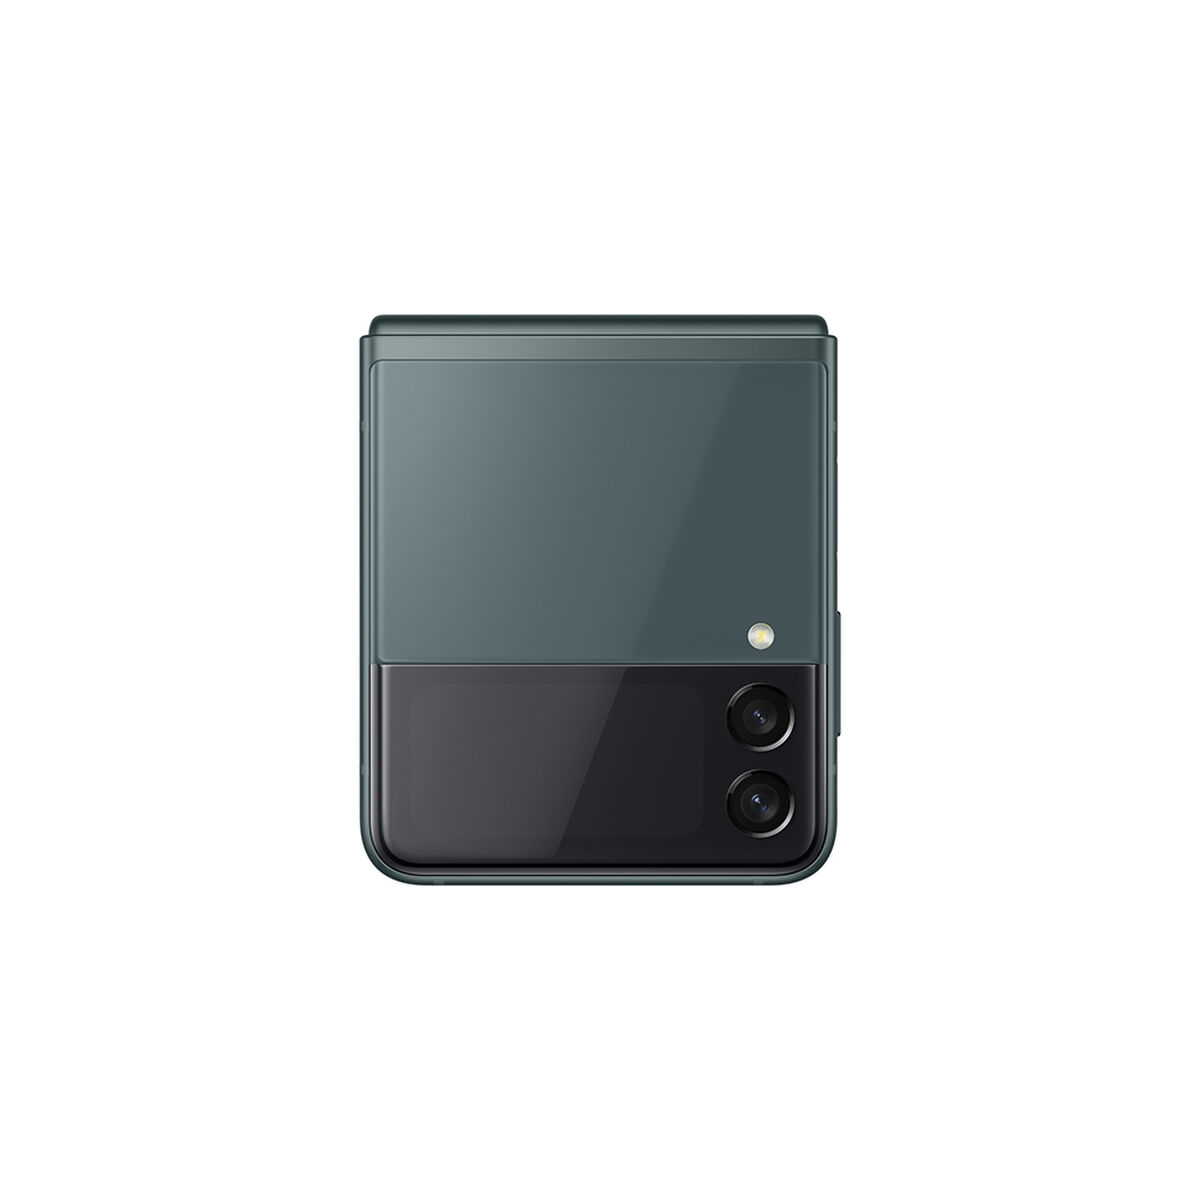 Celular Samsung Galaxy Z Flip3 5G 256GB Green